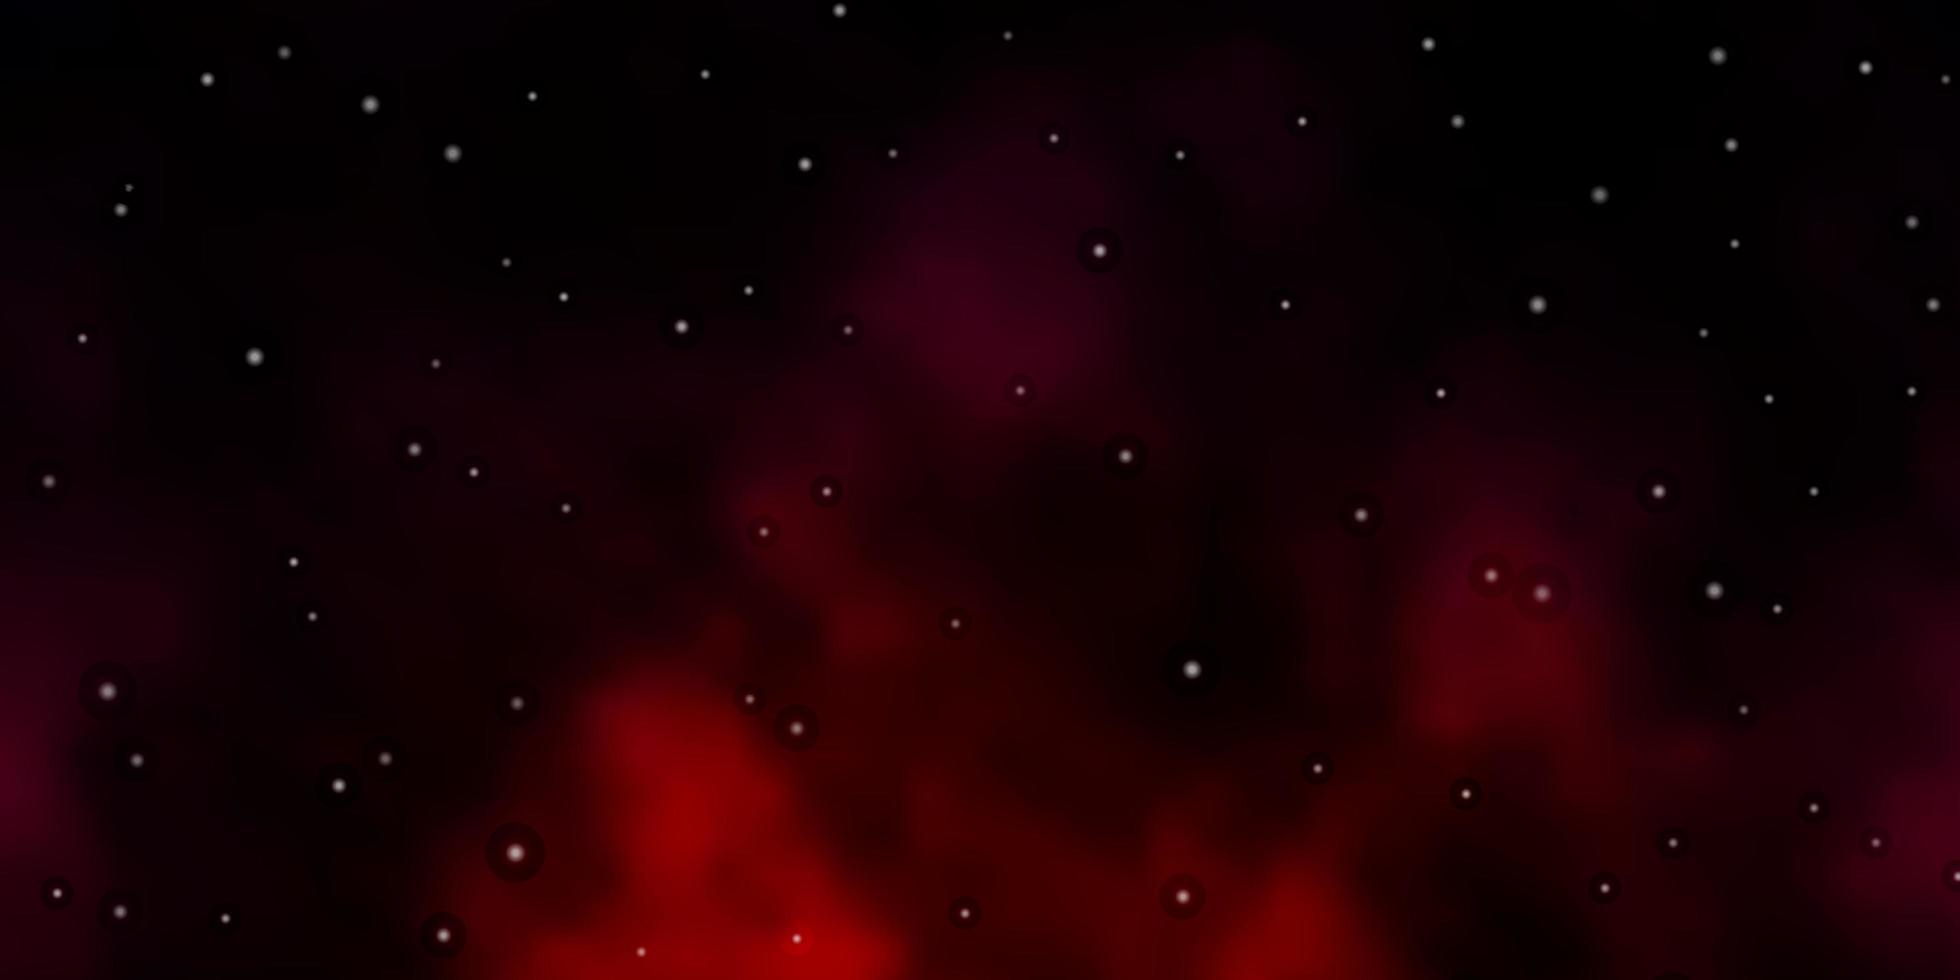 modelo de vetor roxo escuro com estrelas de néon.